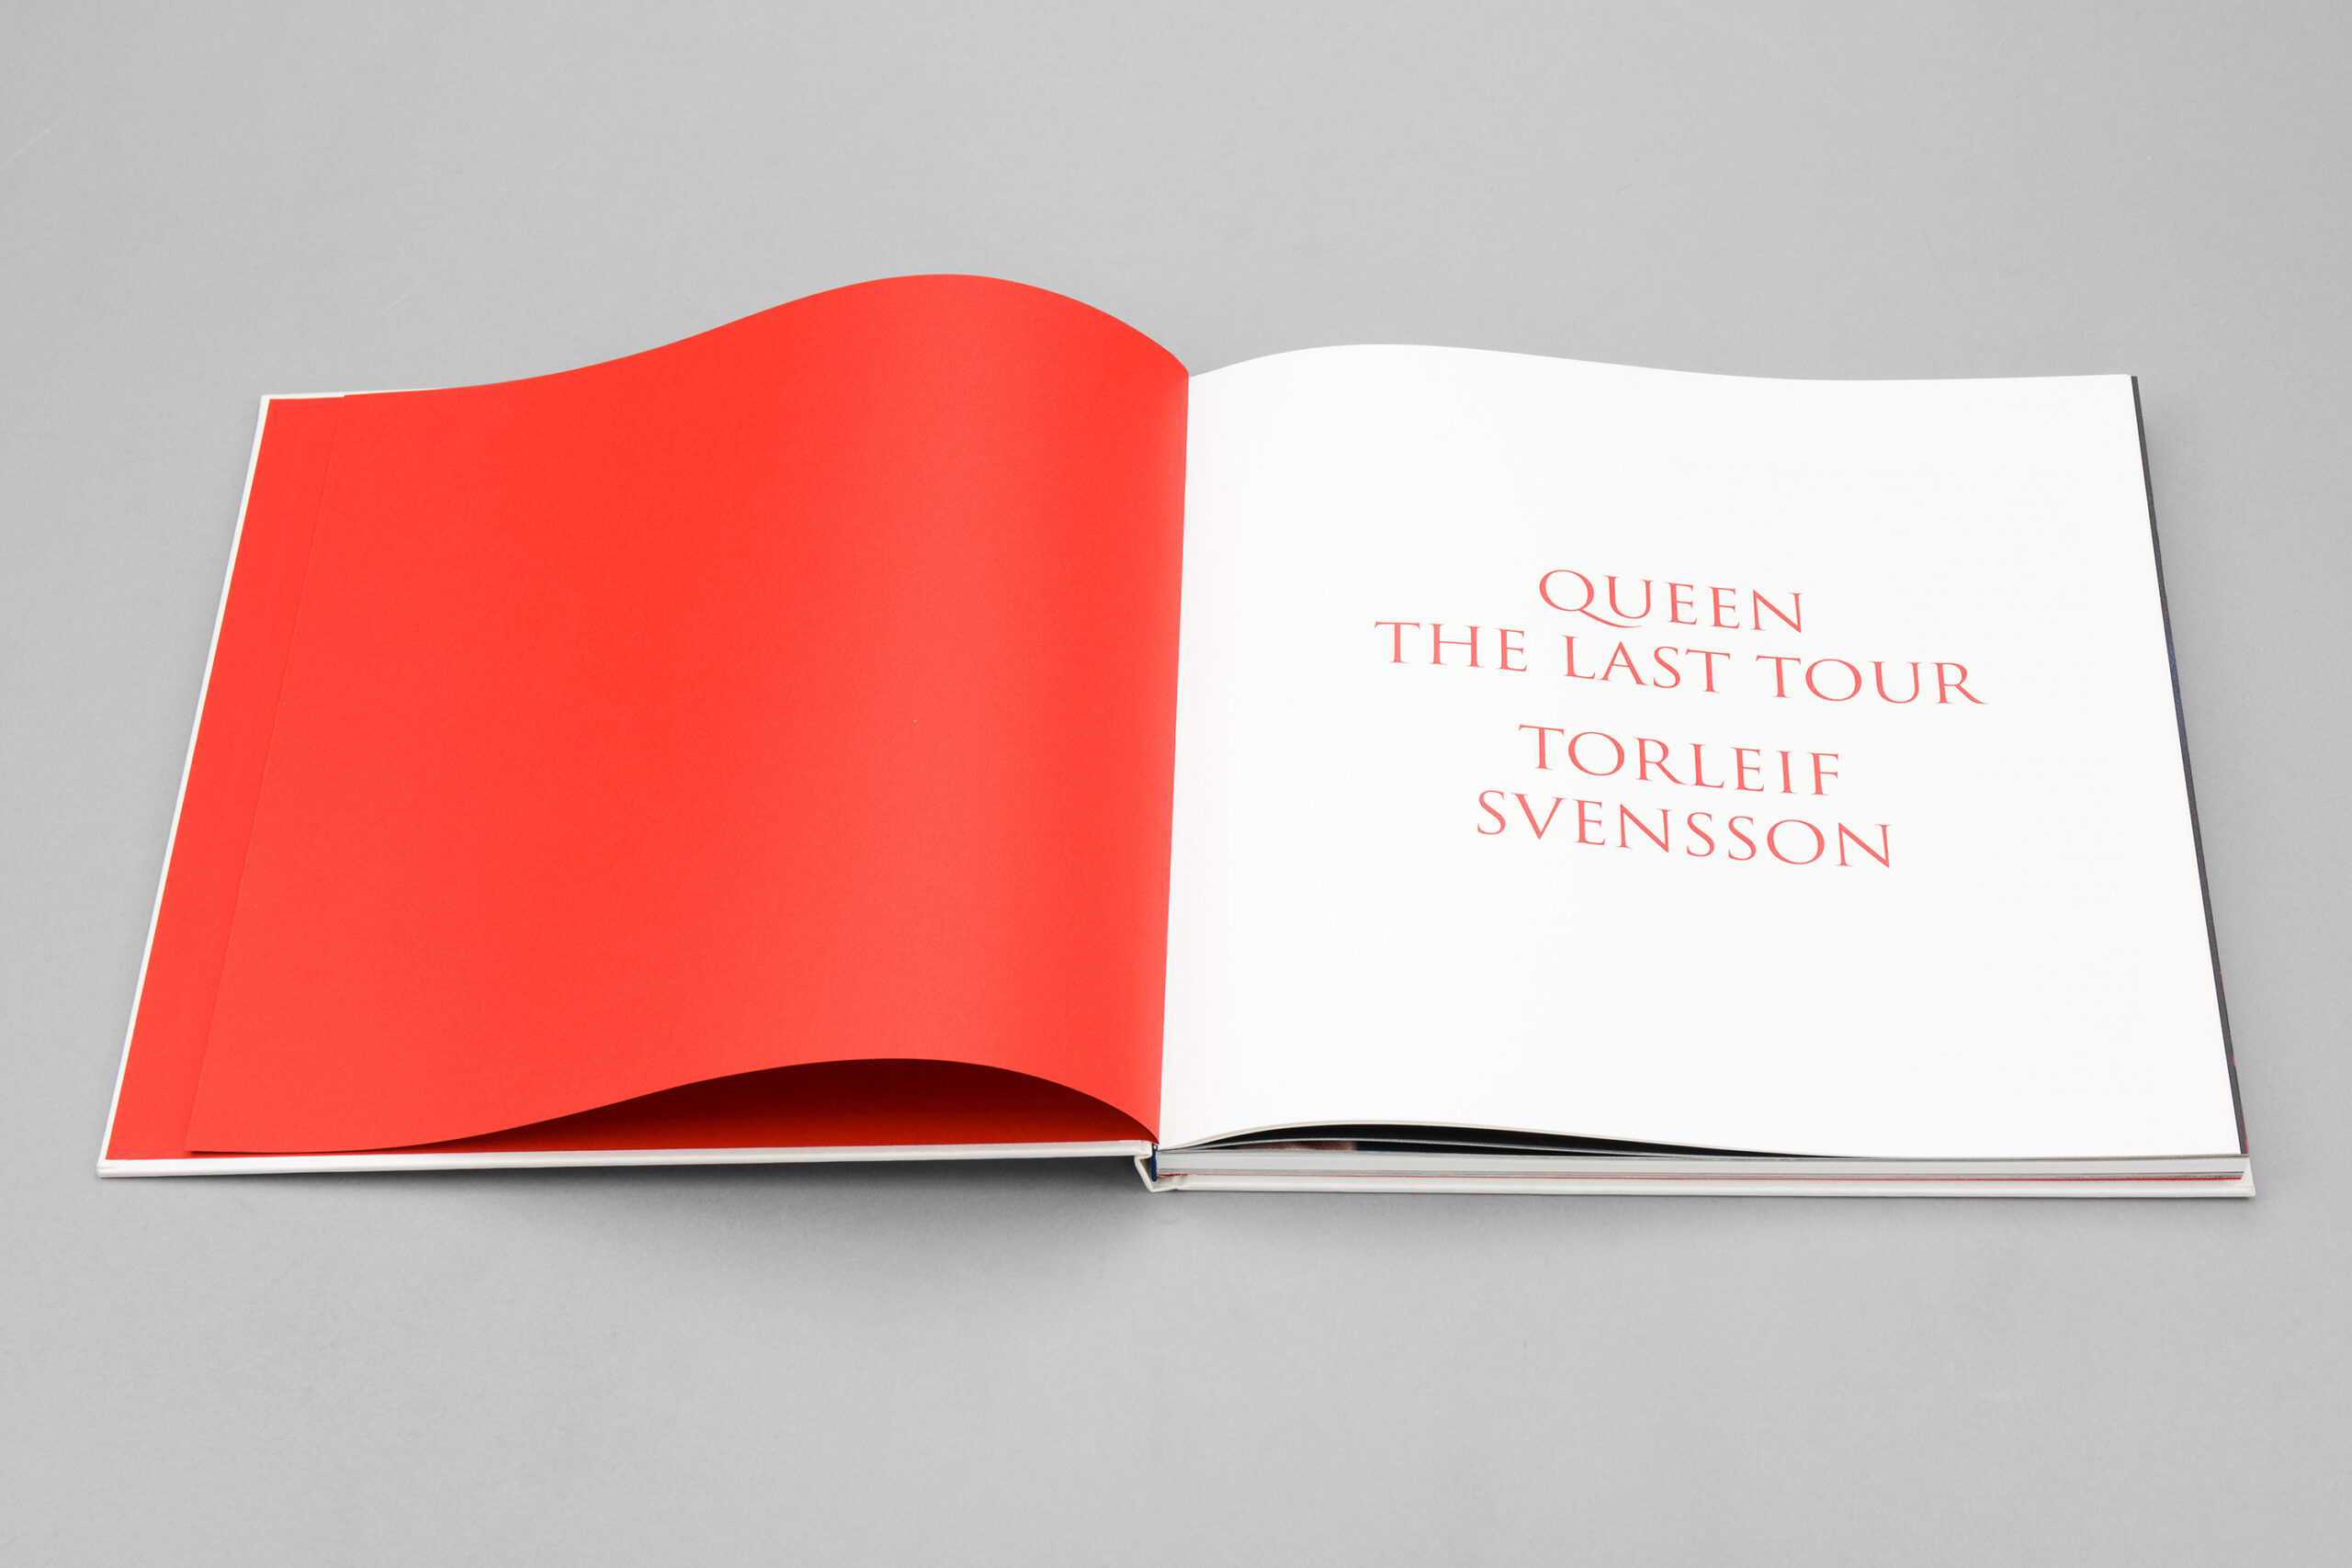 Queen – The Last Tour. Photographs by Torleif Svensson.